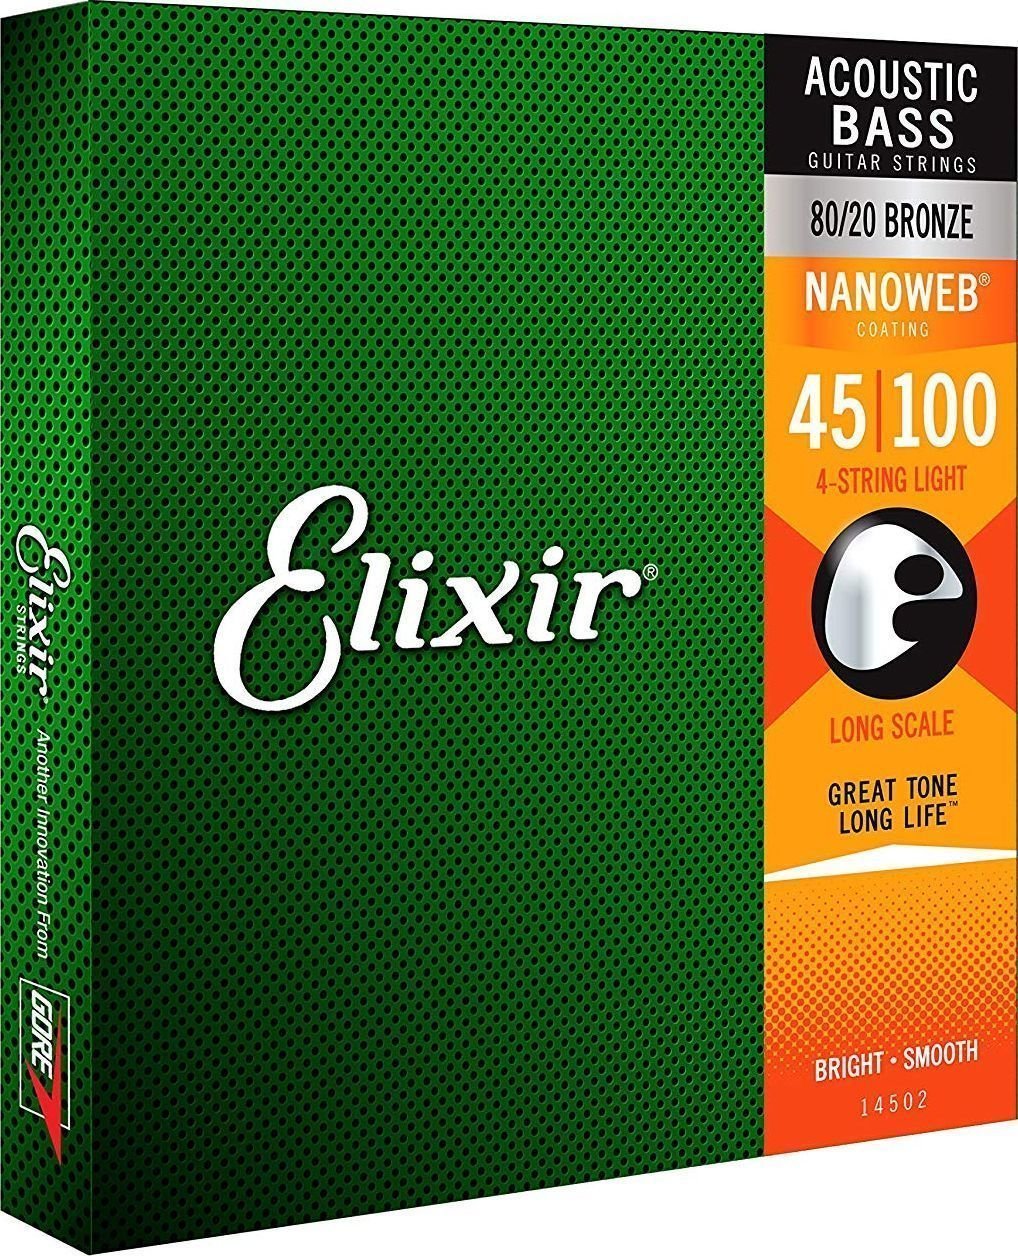 Struny pro akustickou baskytaru Elixir 14502 Anti-Rust Nanoweb